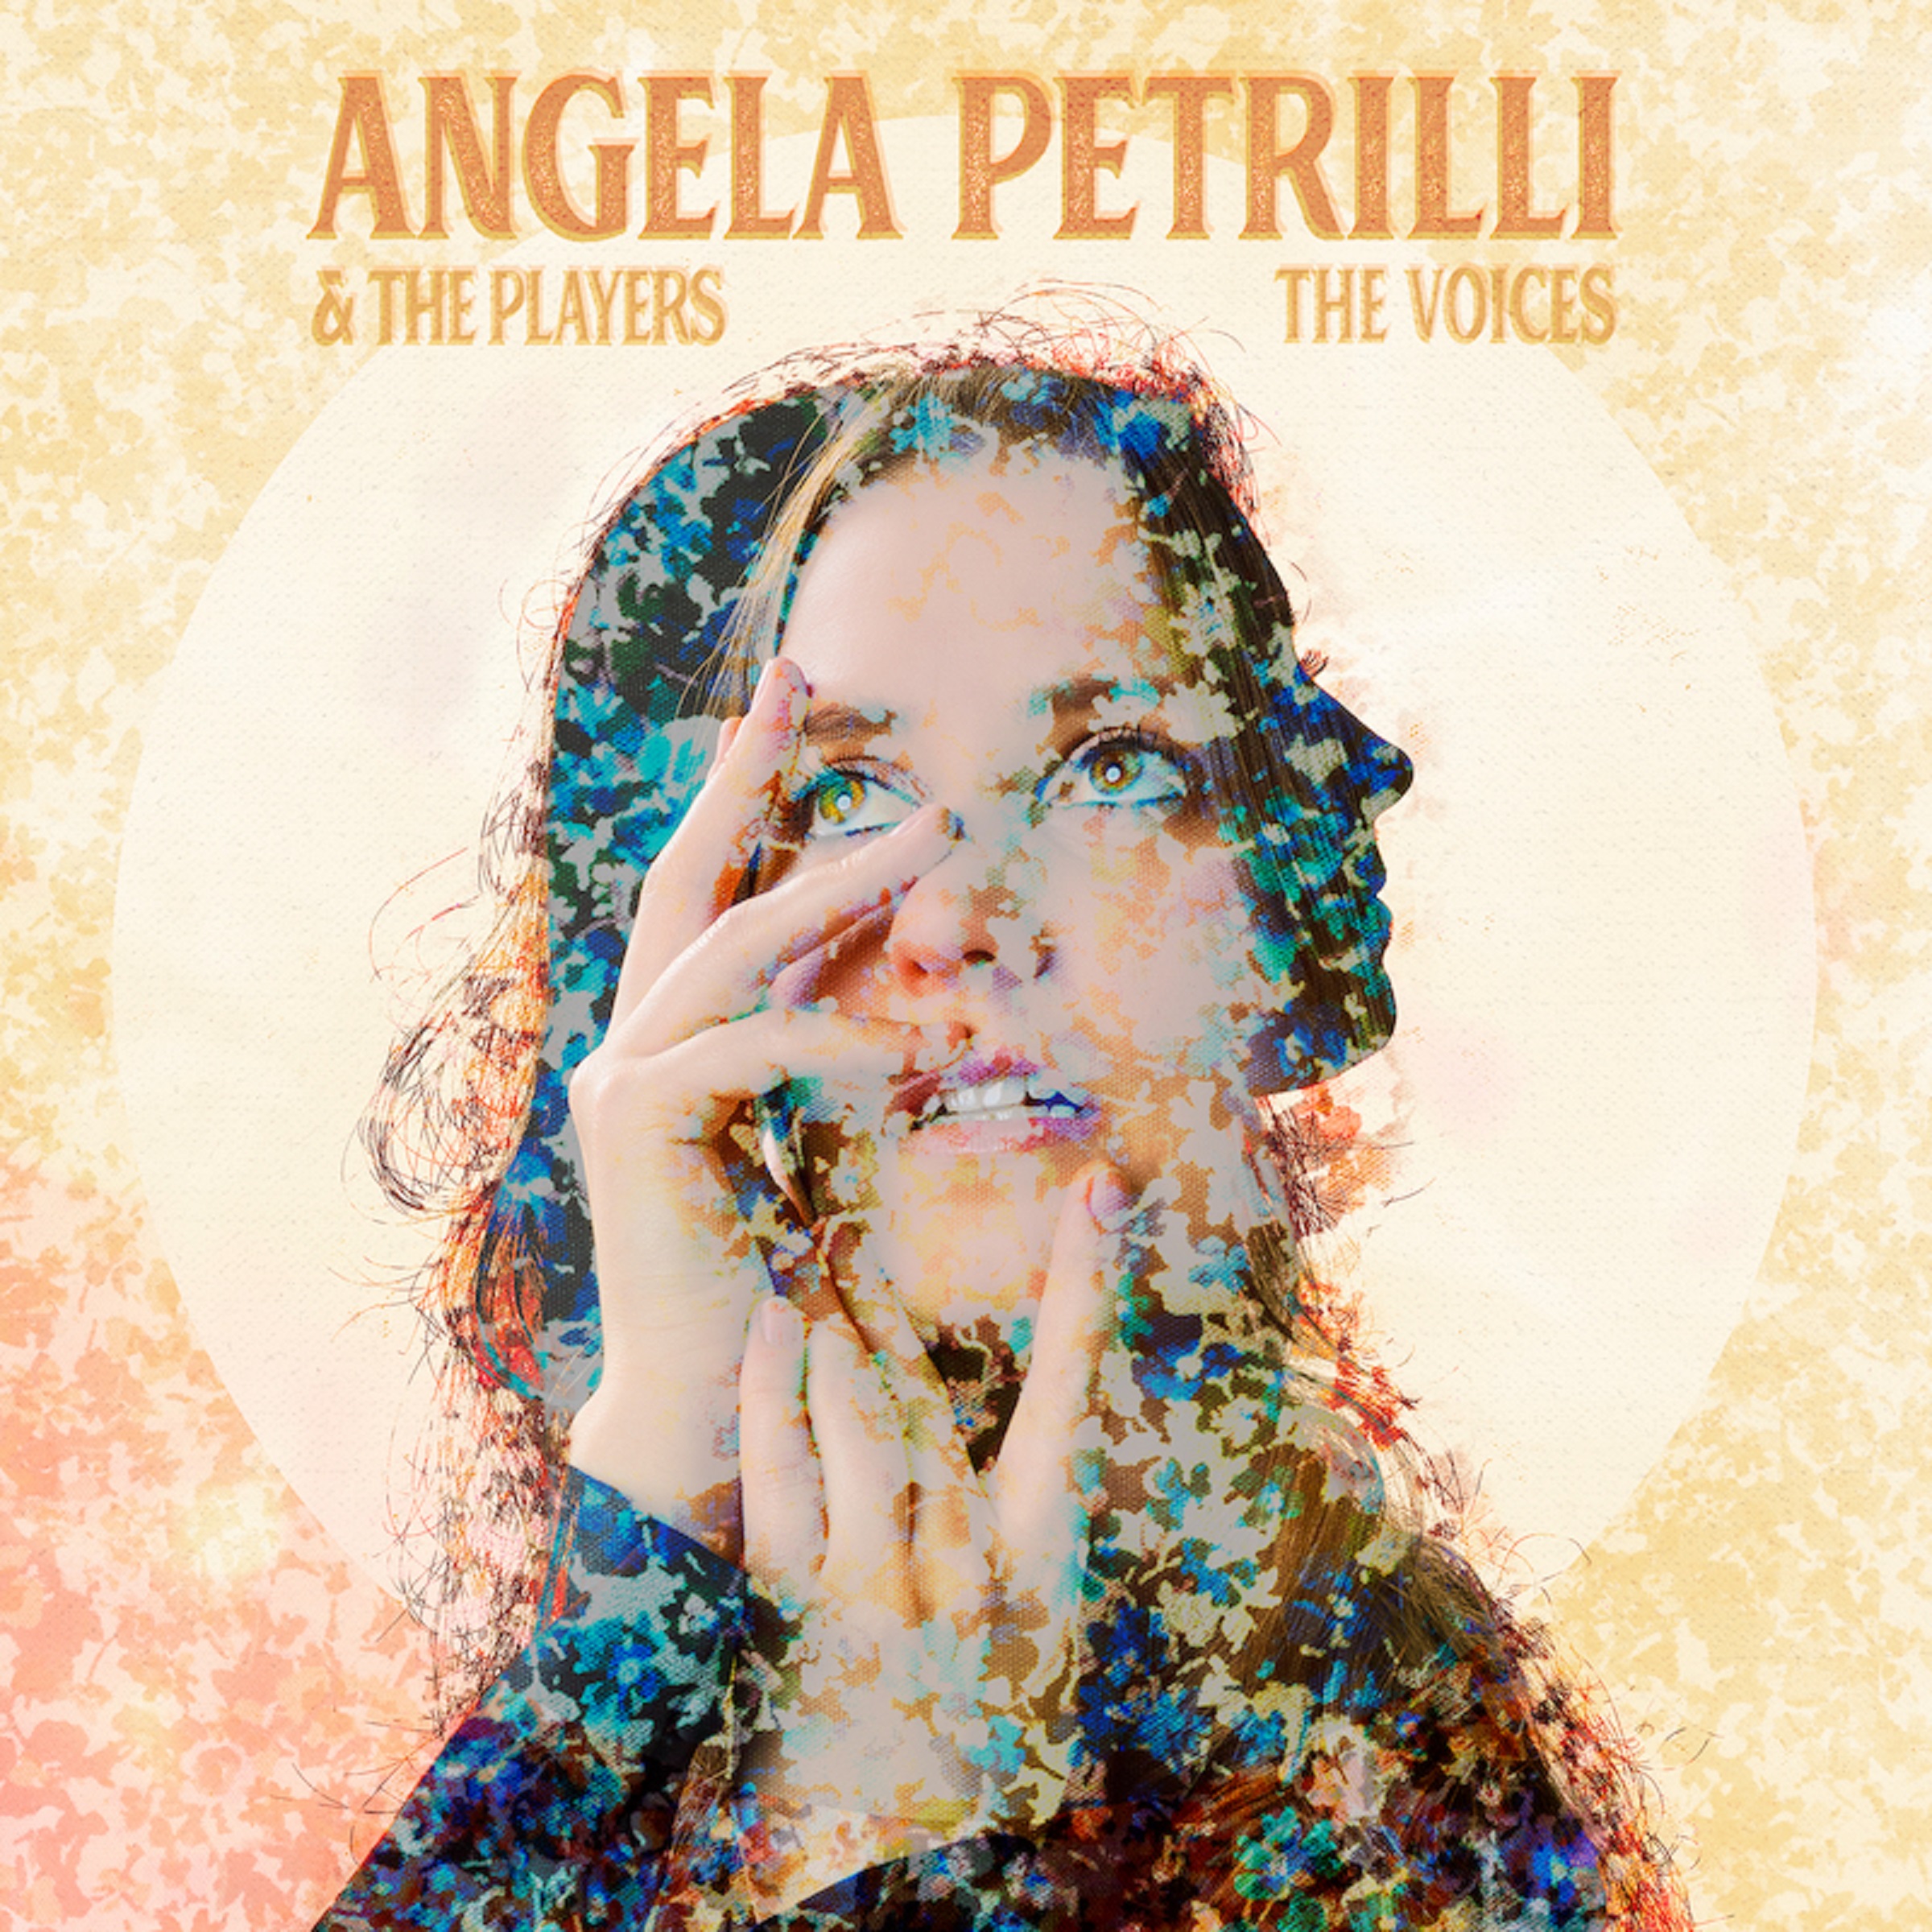 GW Video Premiere: Angela Petrilli & The Players' "The Voices"